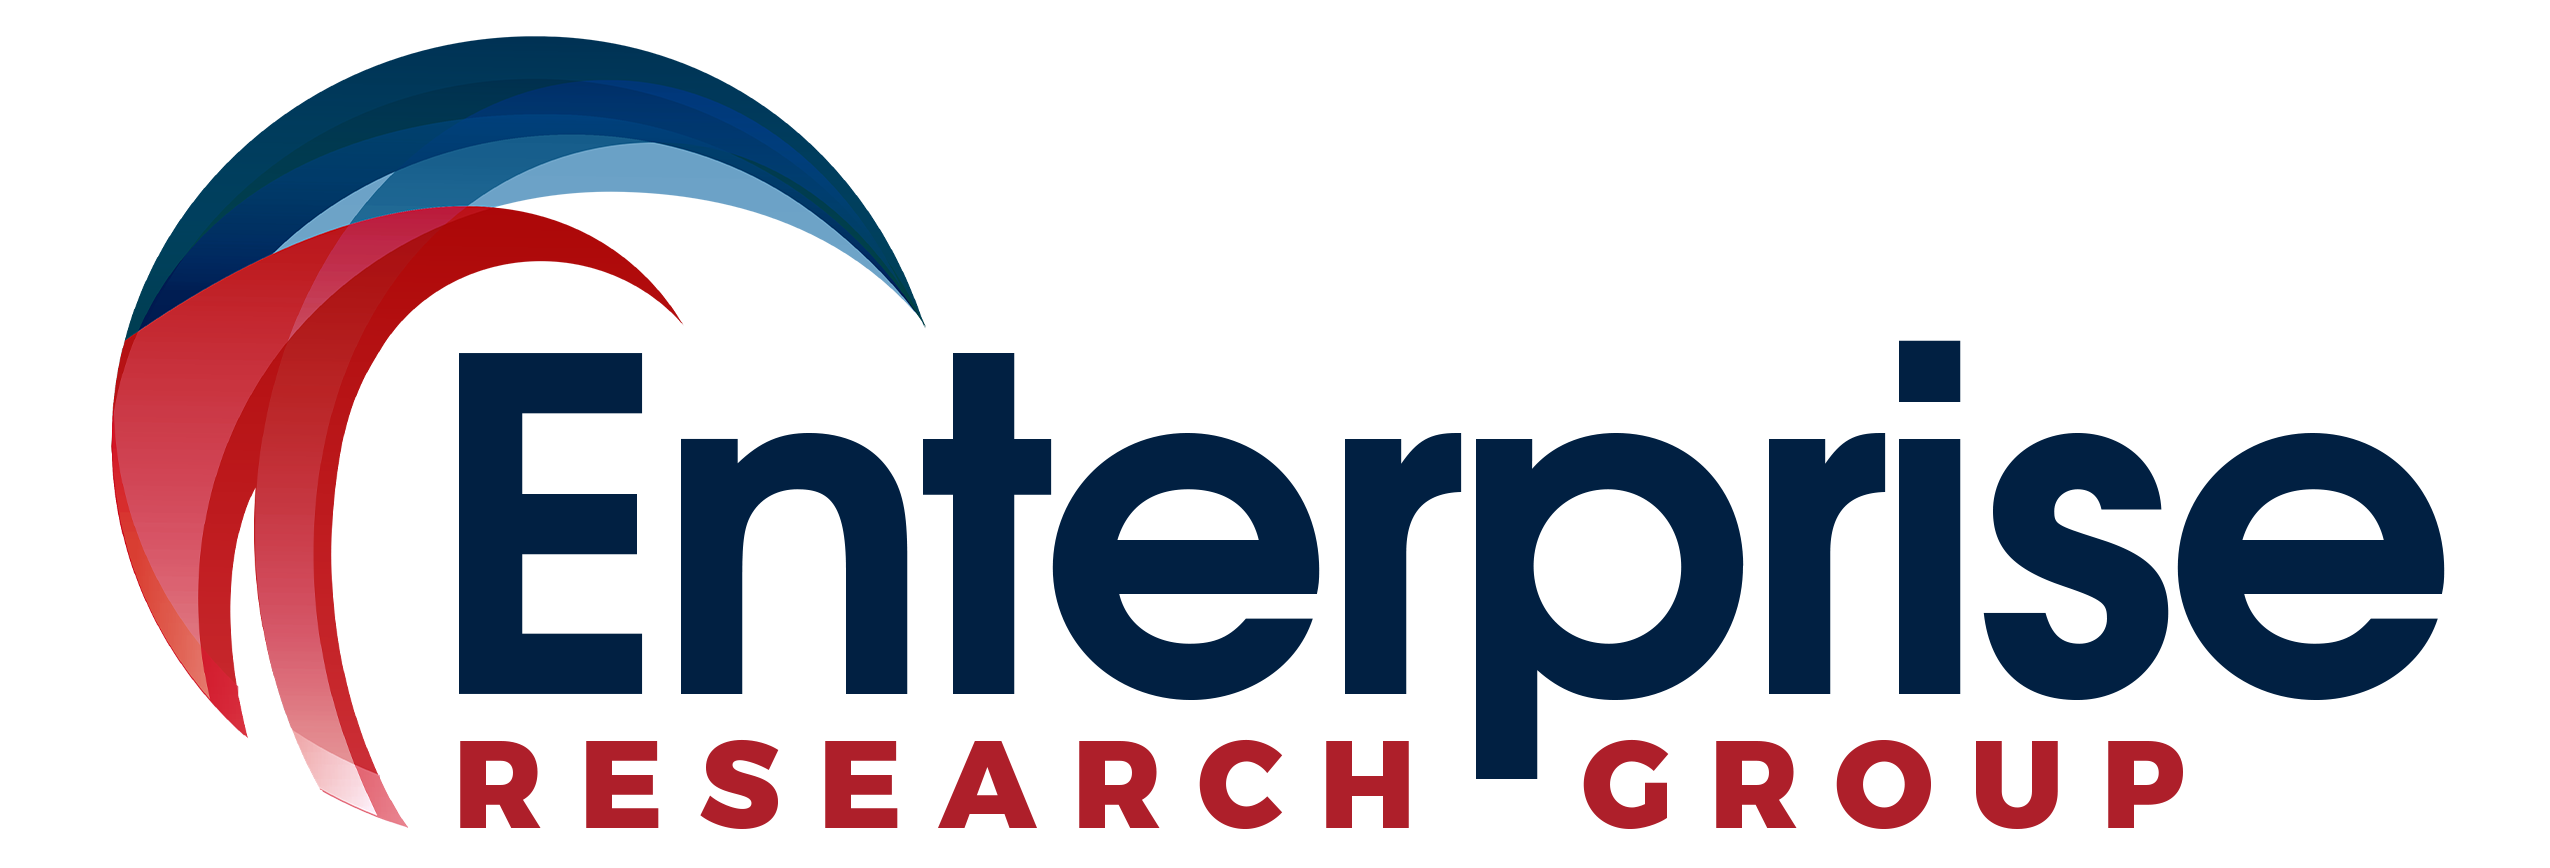 Enterprise Research Group